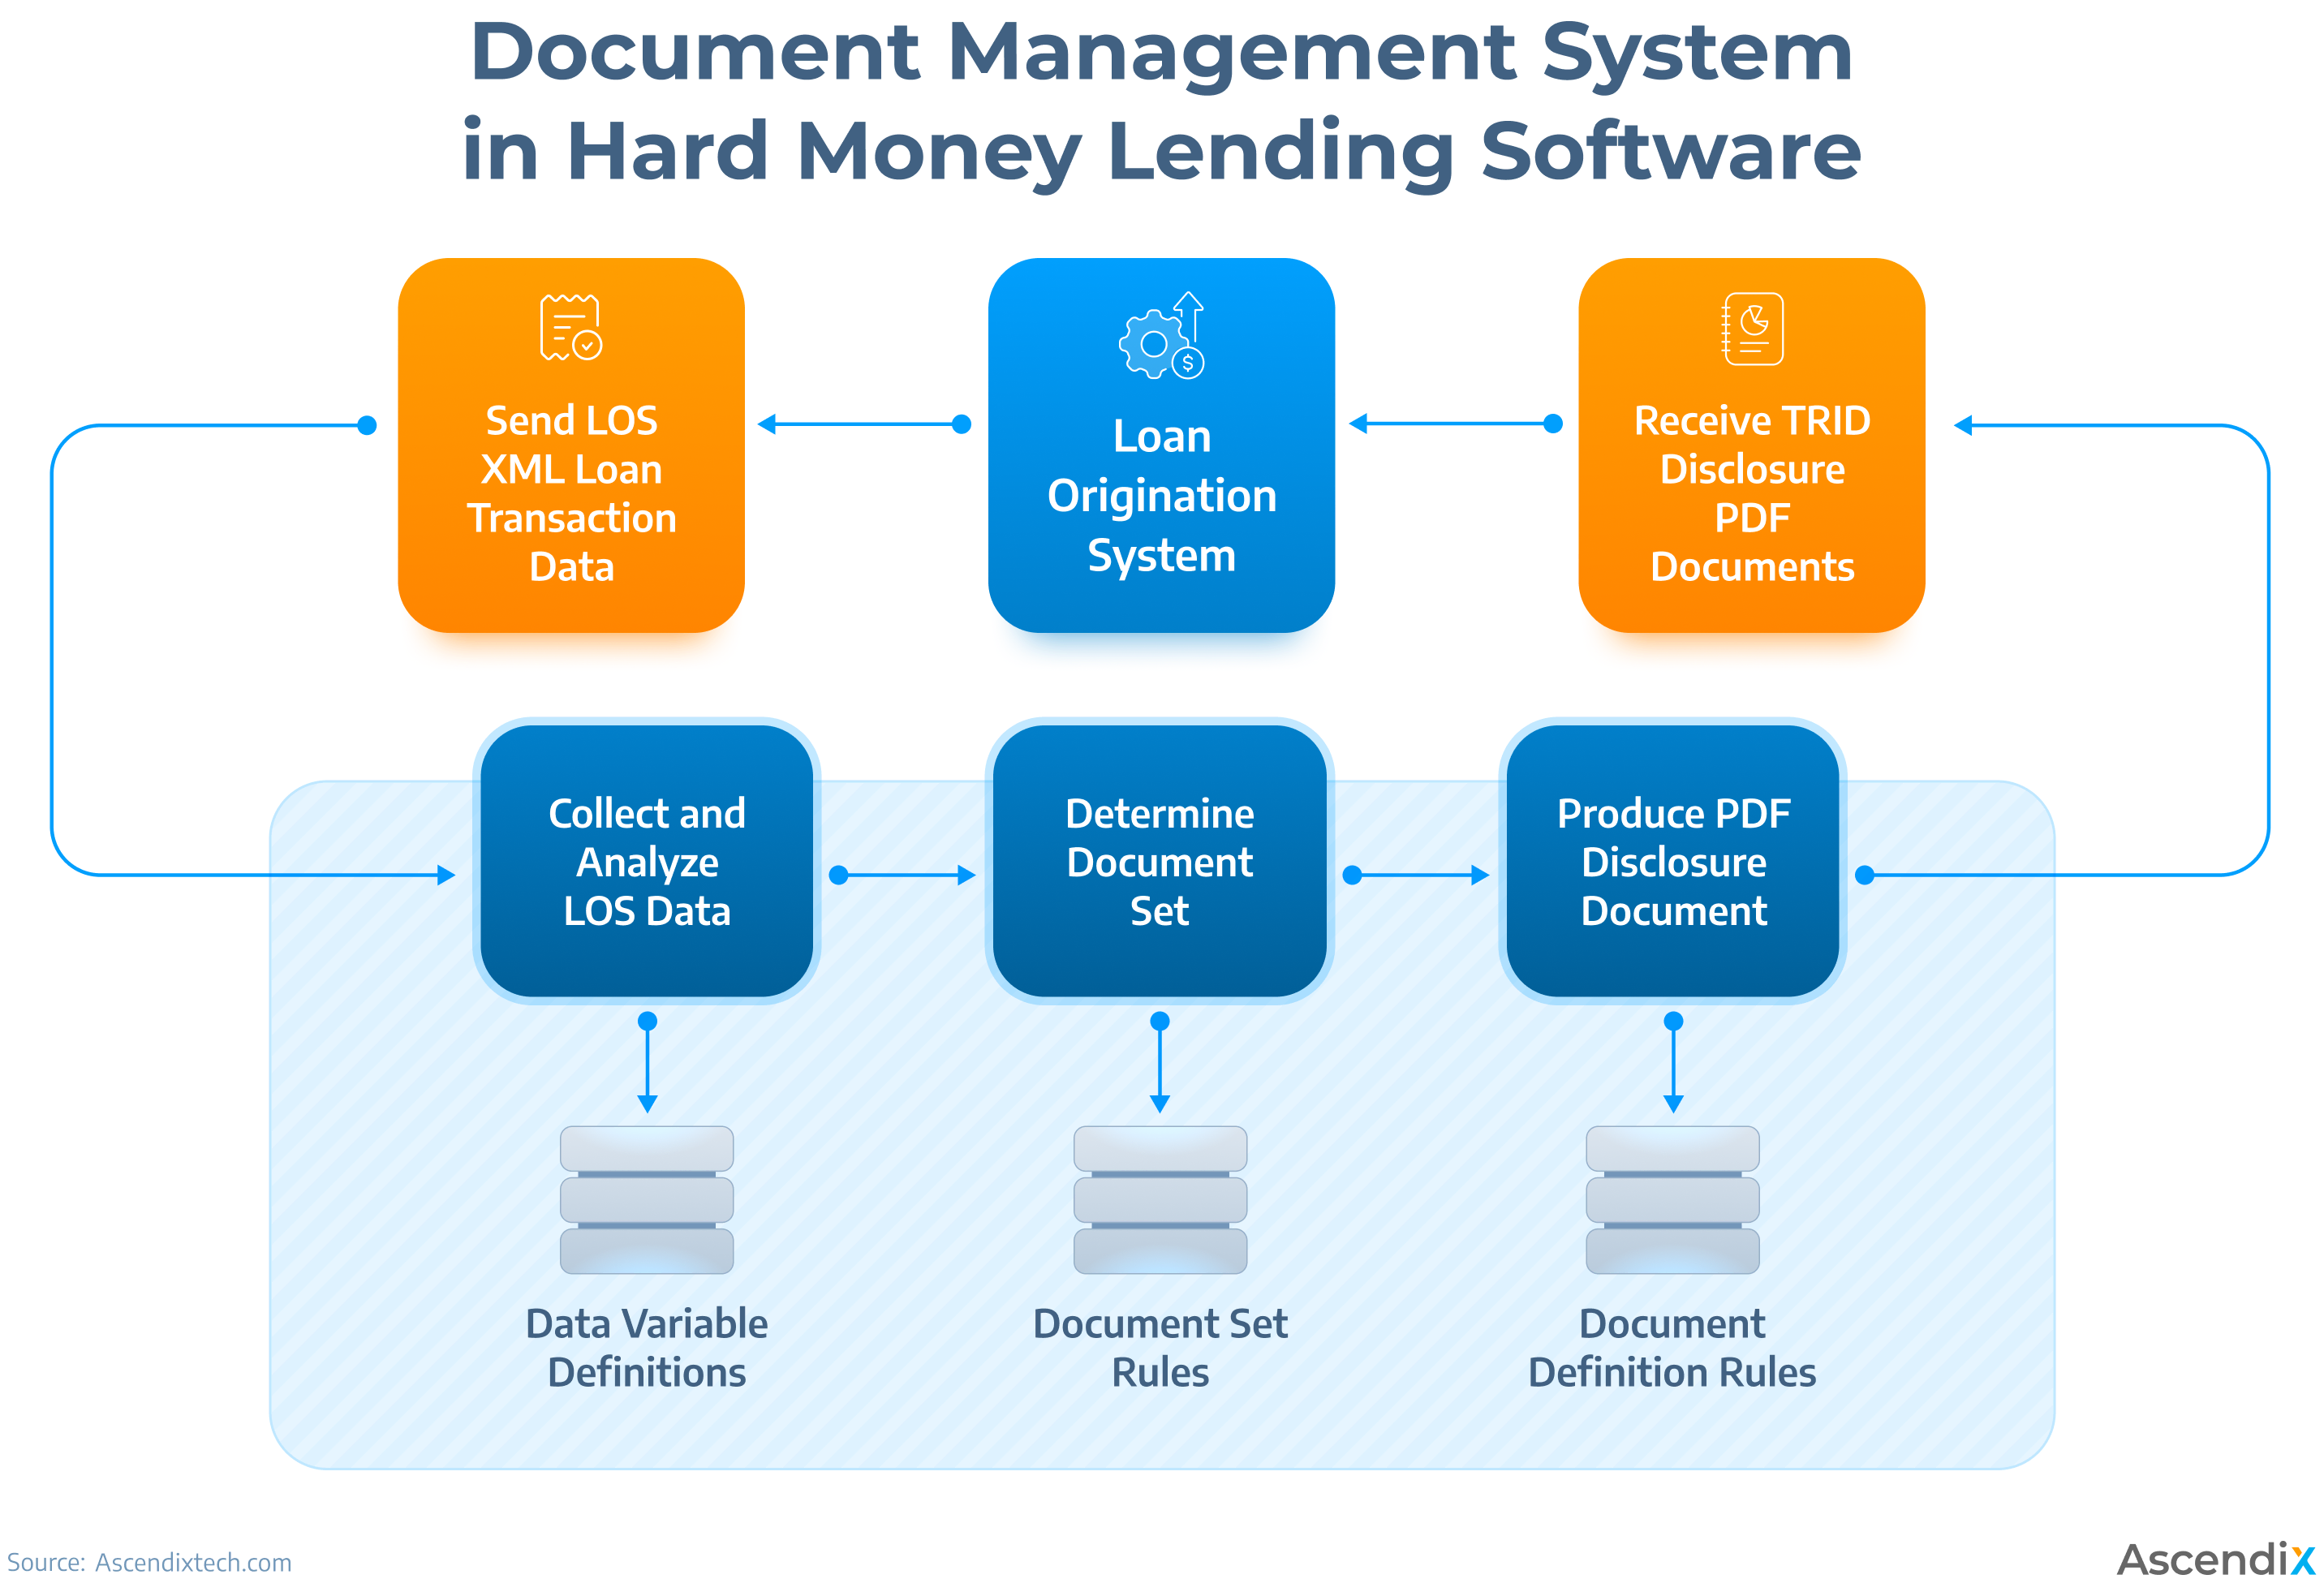 scheme showing Document Management System in Hard Money Lending Software